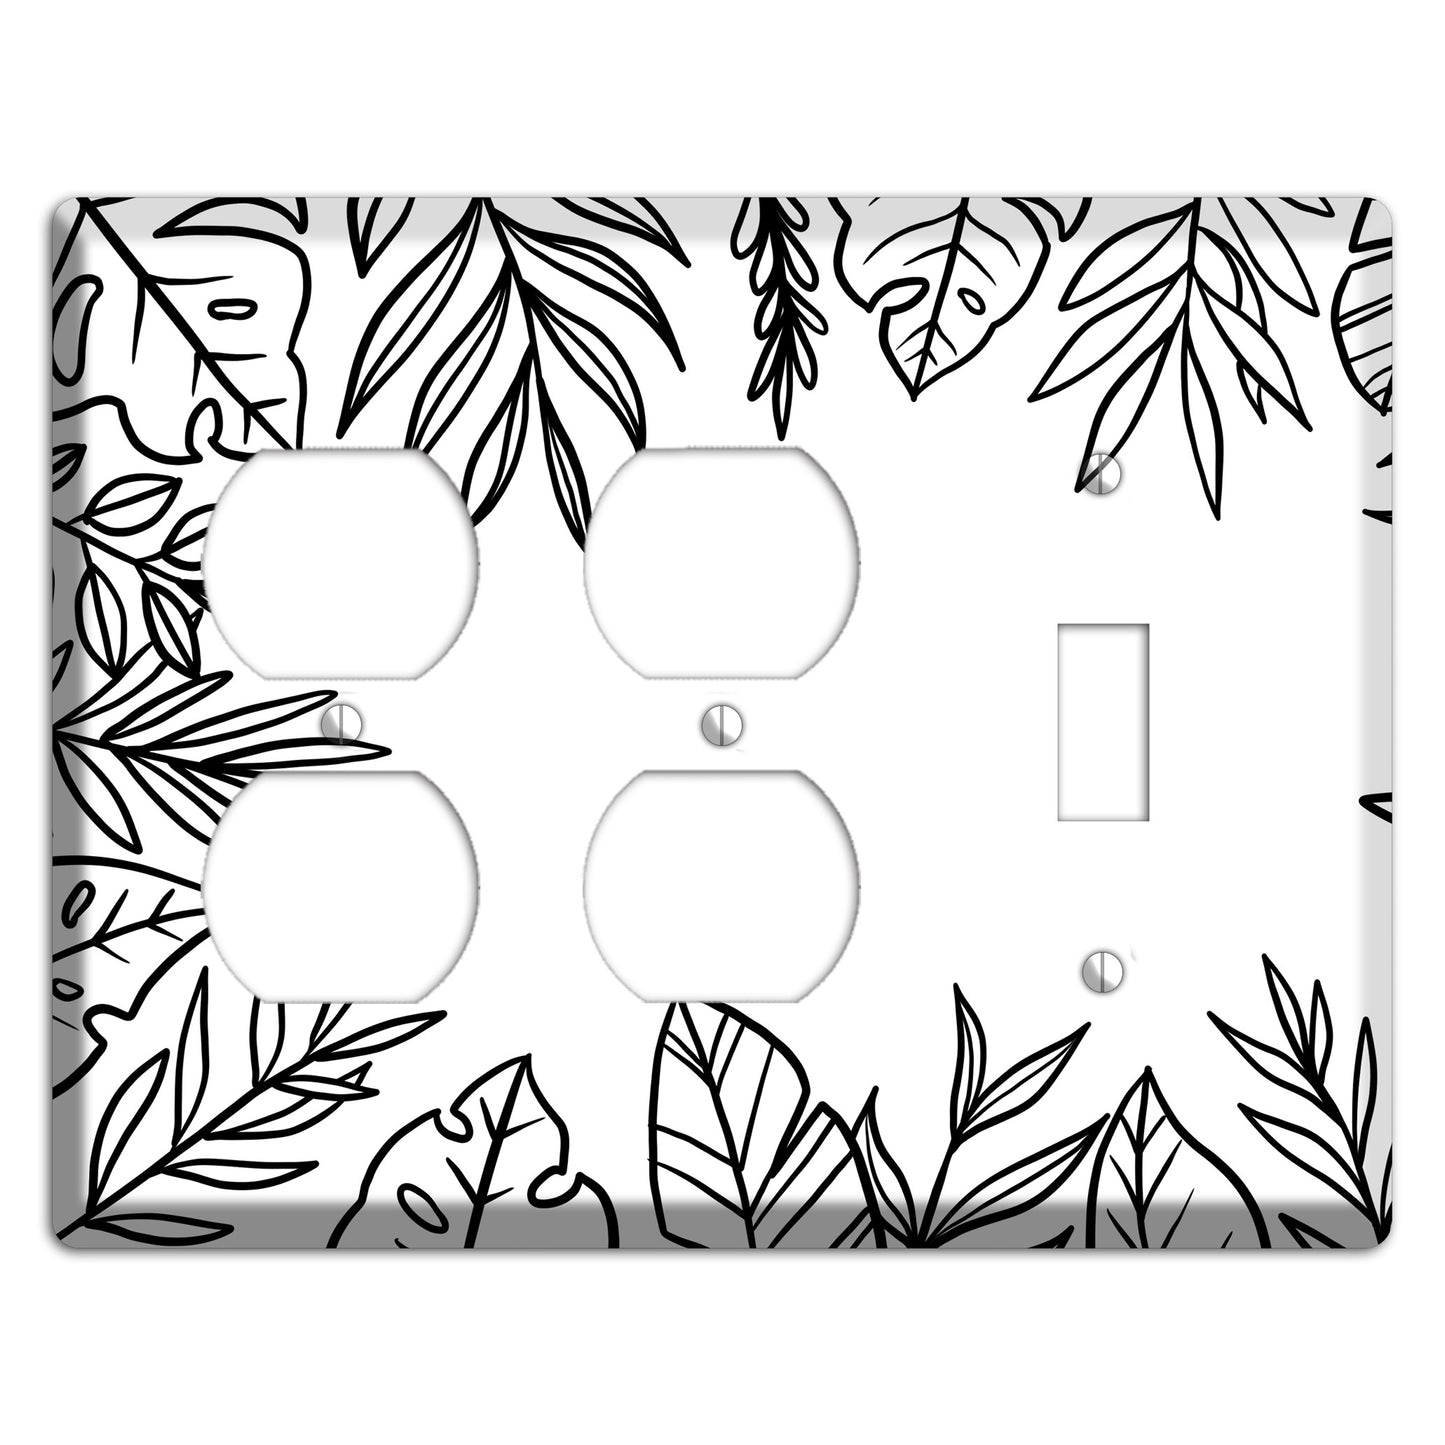 Hand-Drawn Leaves 4 2 Duplex / Toggle Wallplate